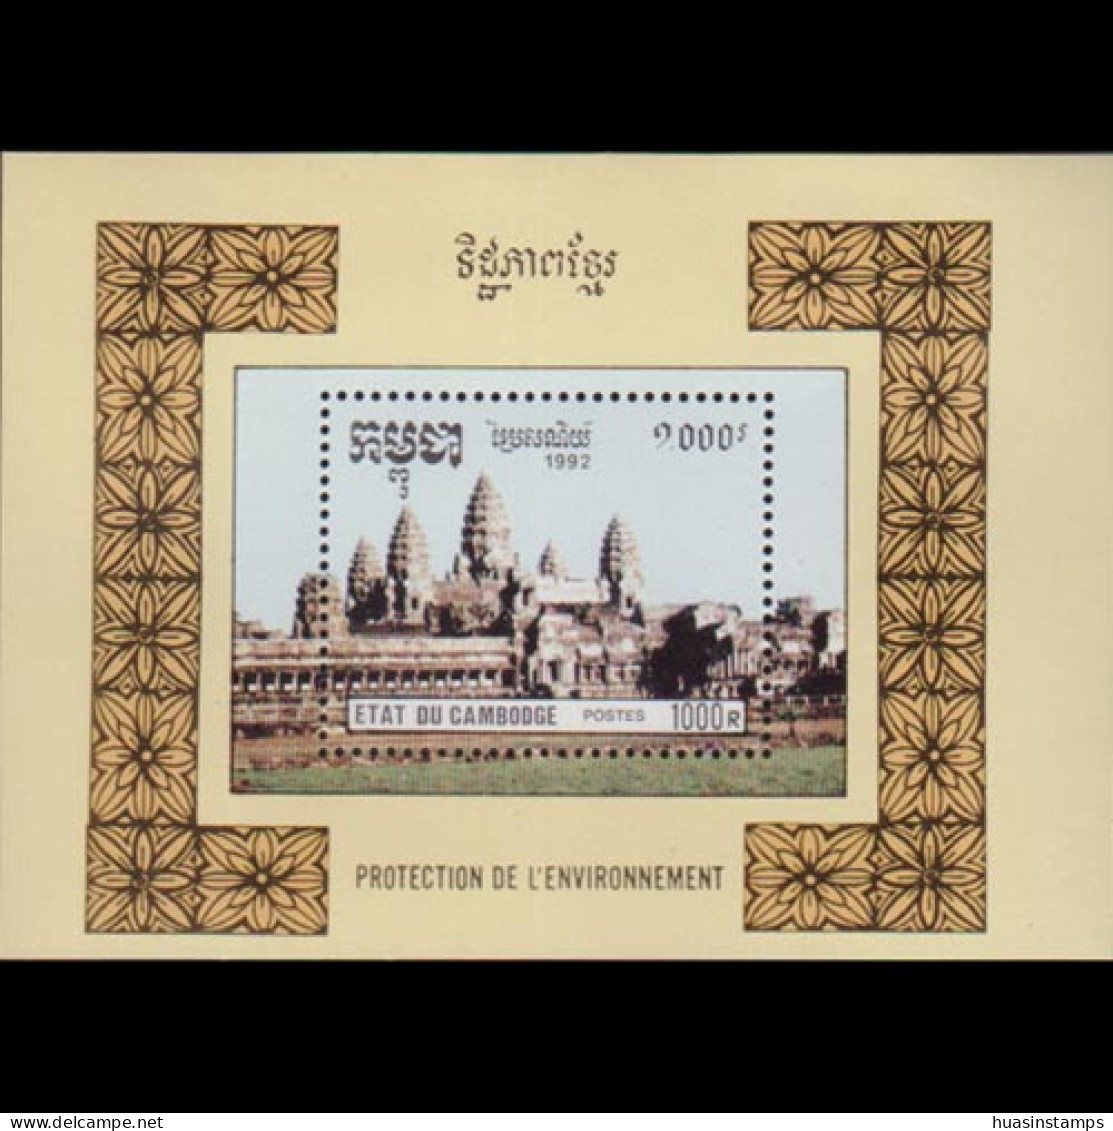 CAMBODIA 1992 - Scott# 1235 S/S Angkor Wat MNH - Cambodia